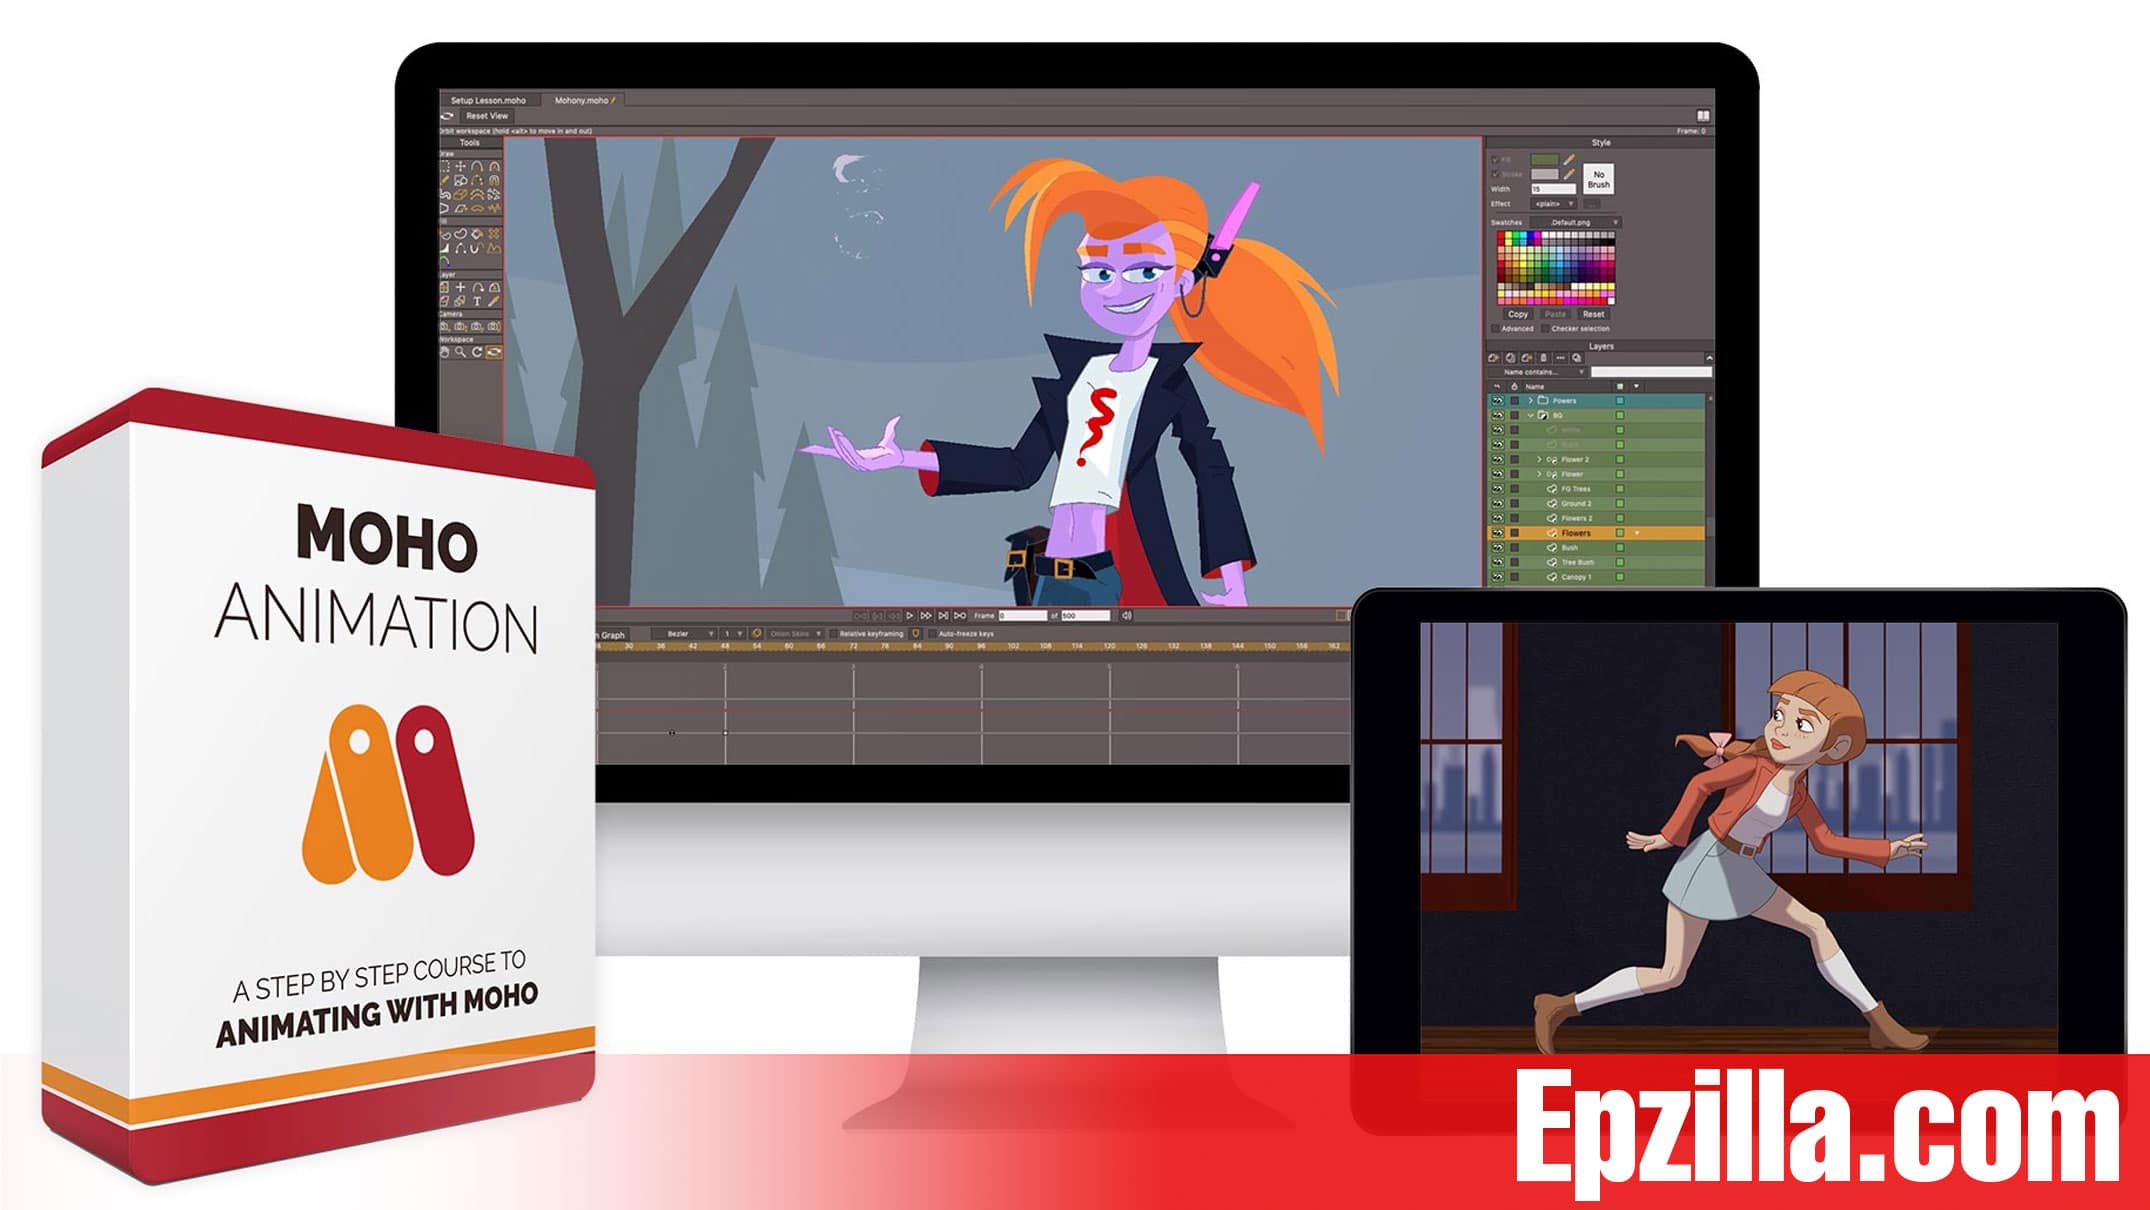 Bloop Animations Moho Animation Free Download Epzilla.com